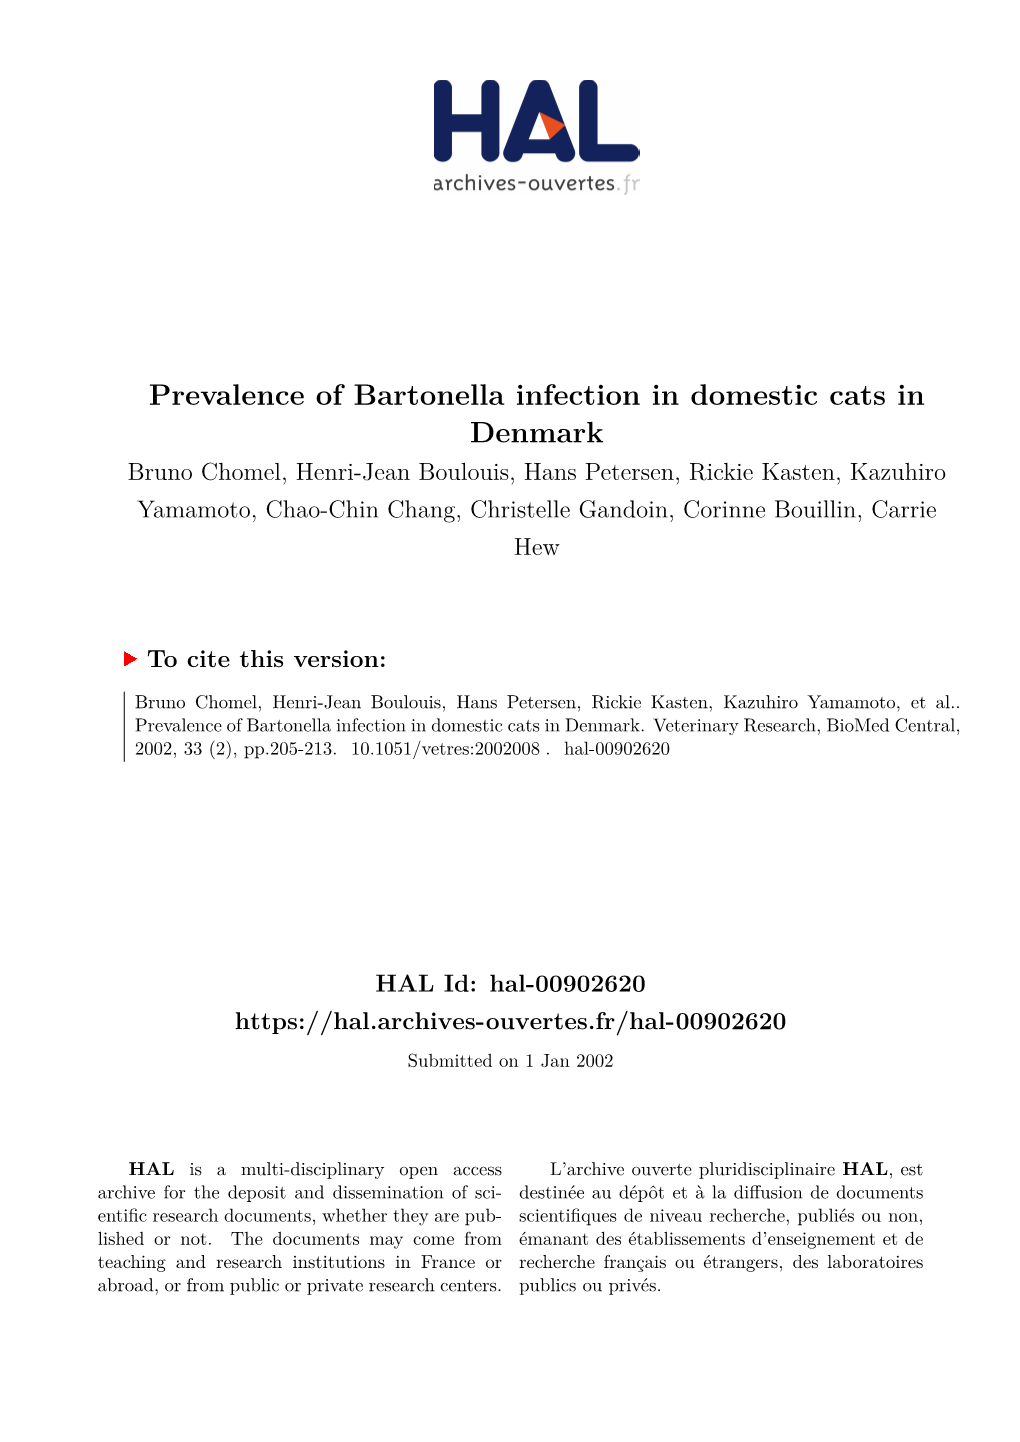 Prevalence of Bartonella Infection in Domestic Cats in Denmark